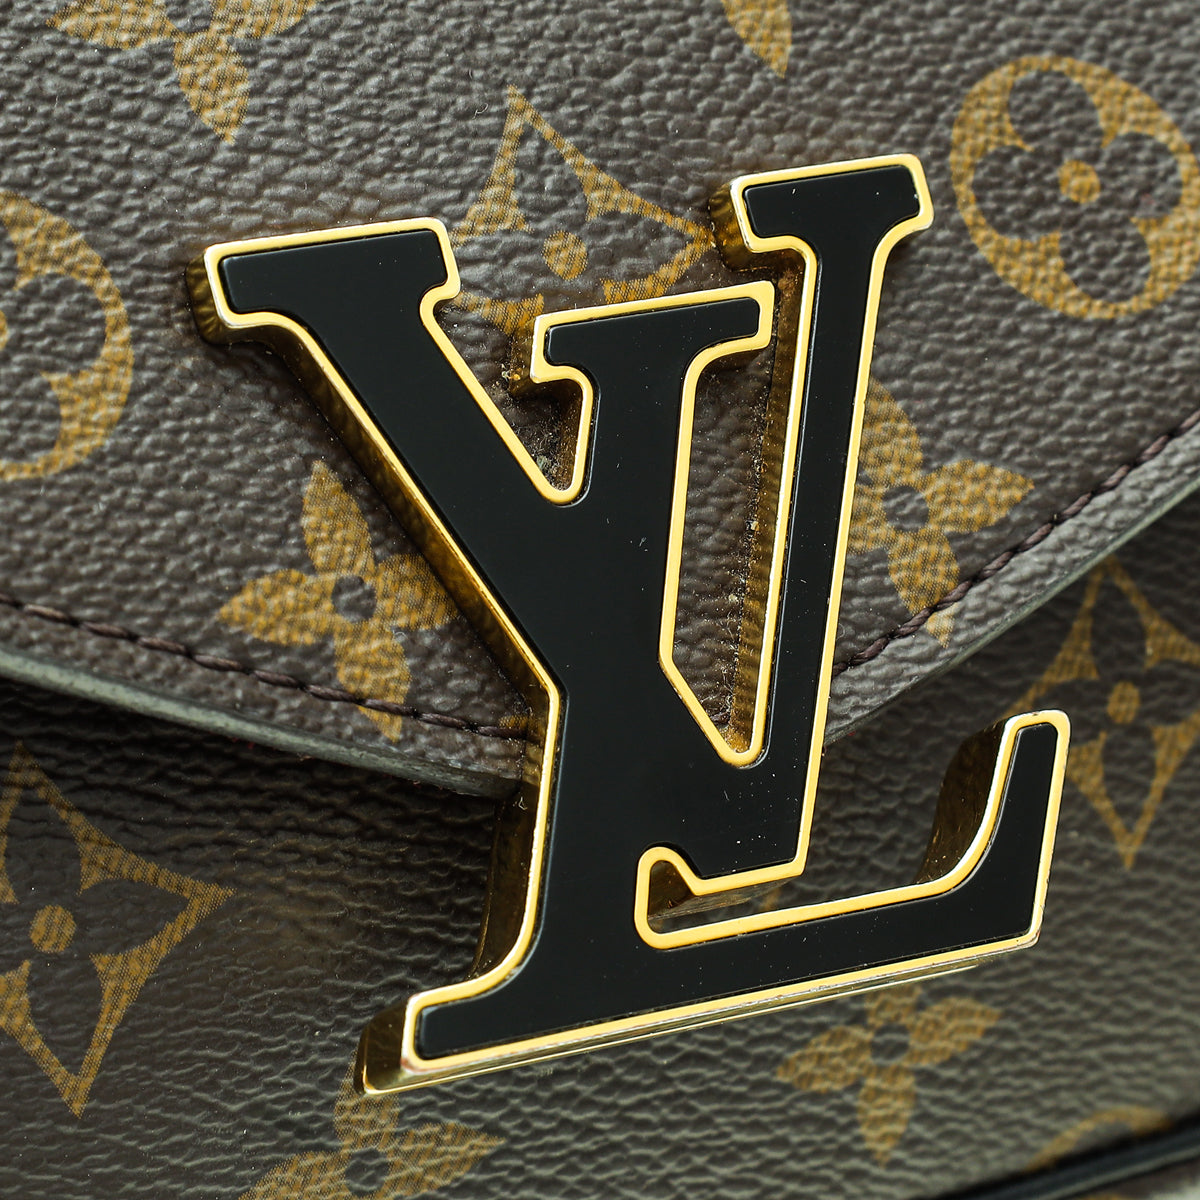 Louis Vuitton Monogram Black Passy Bag